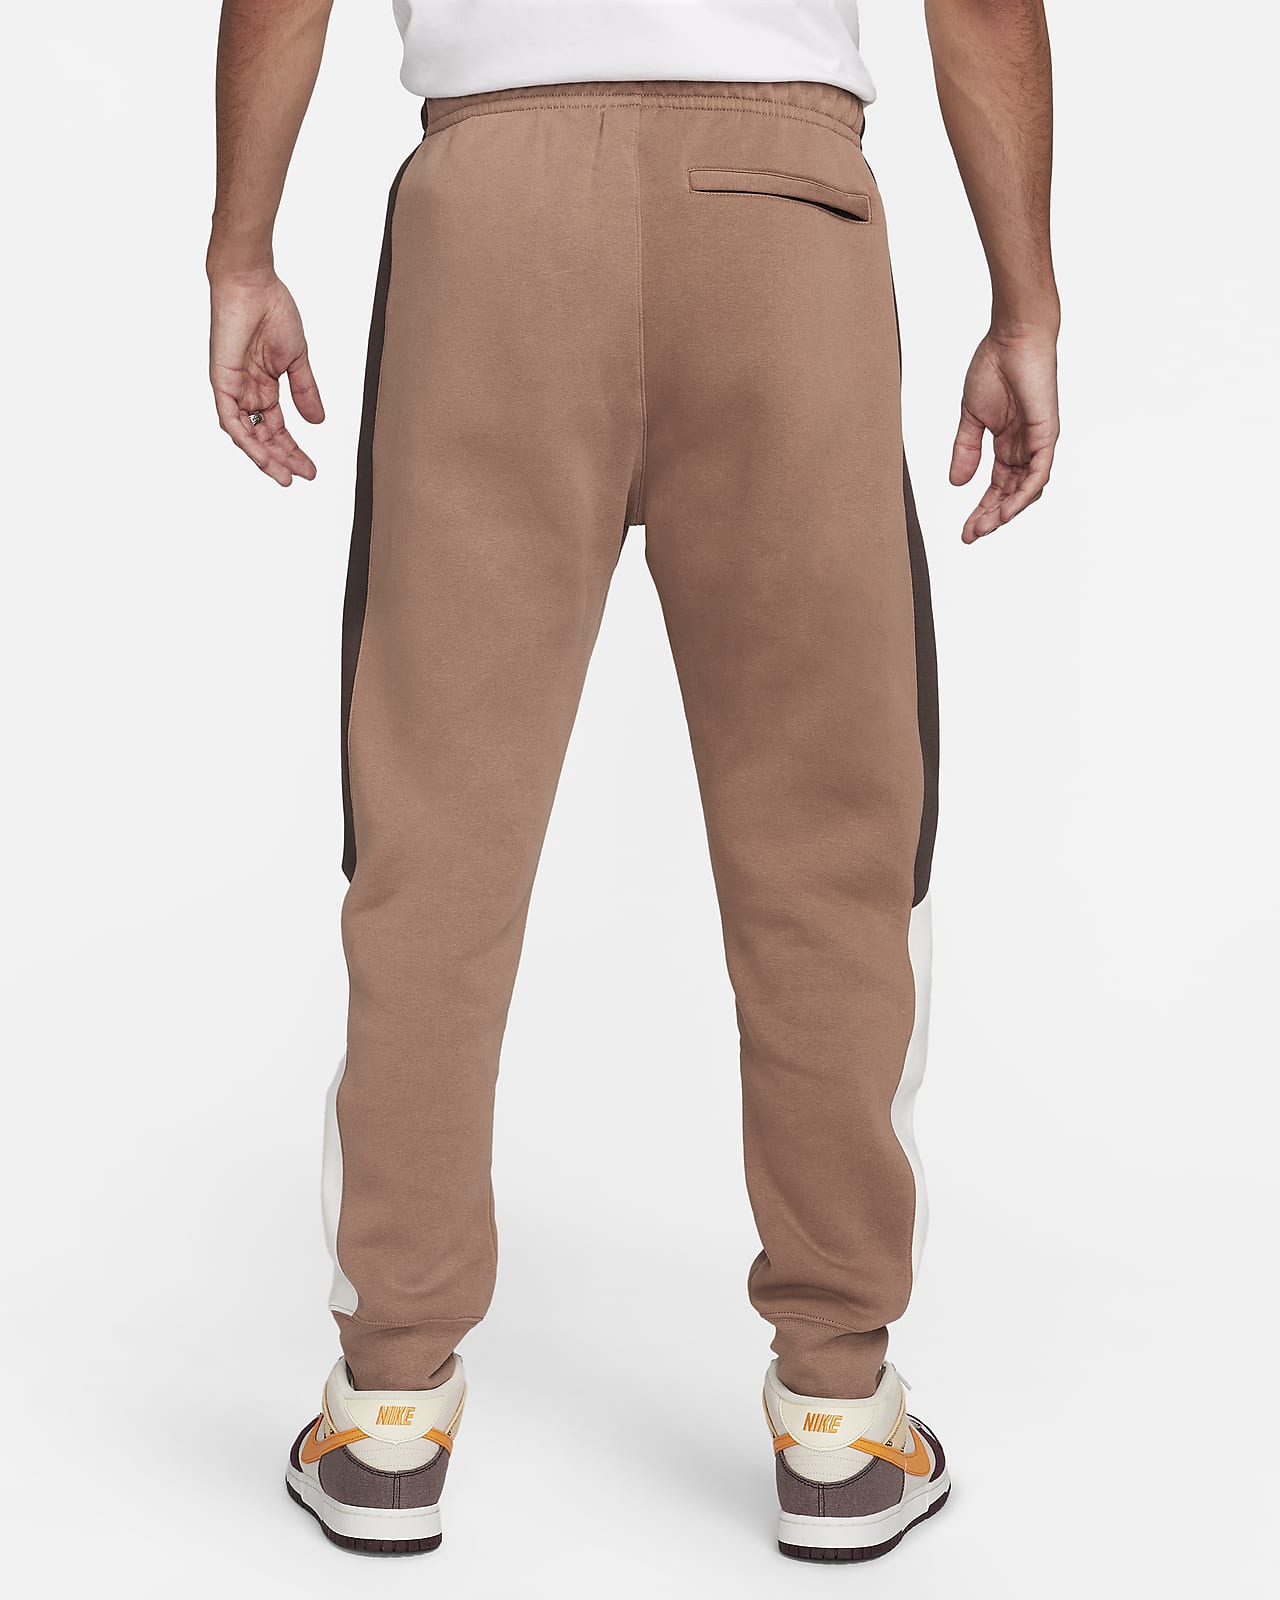 Jogger Pants Nike Solo Swoosh Men's Fleece Pants Baroque Brown